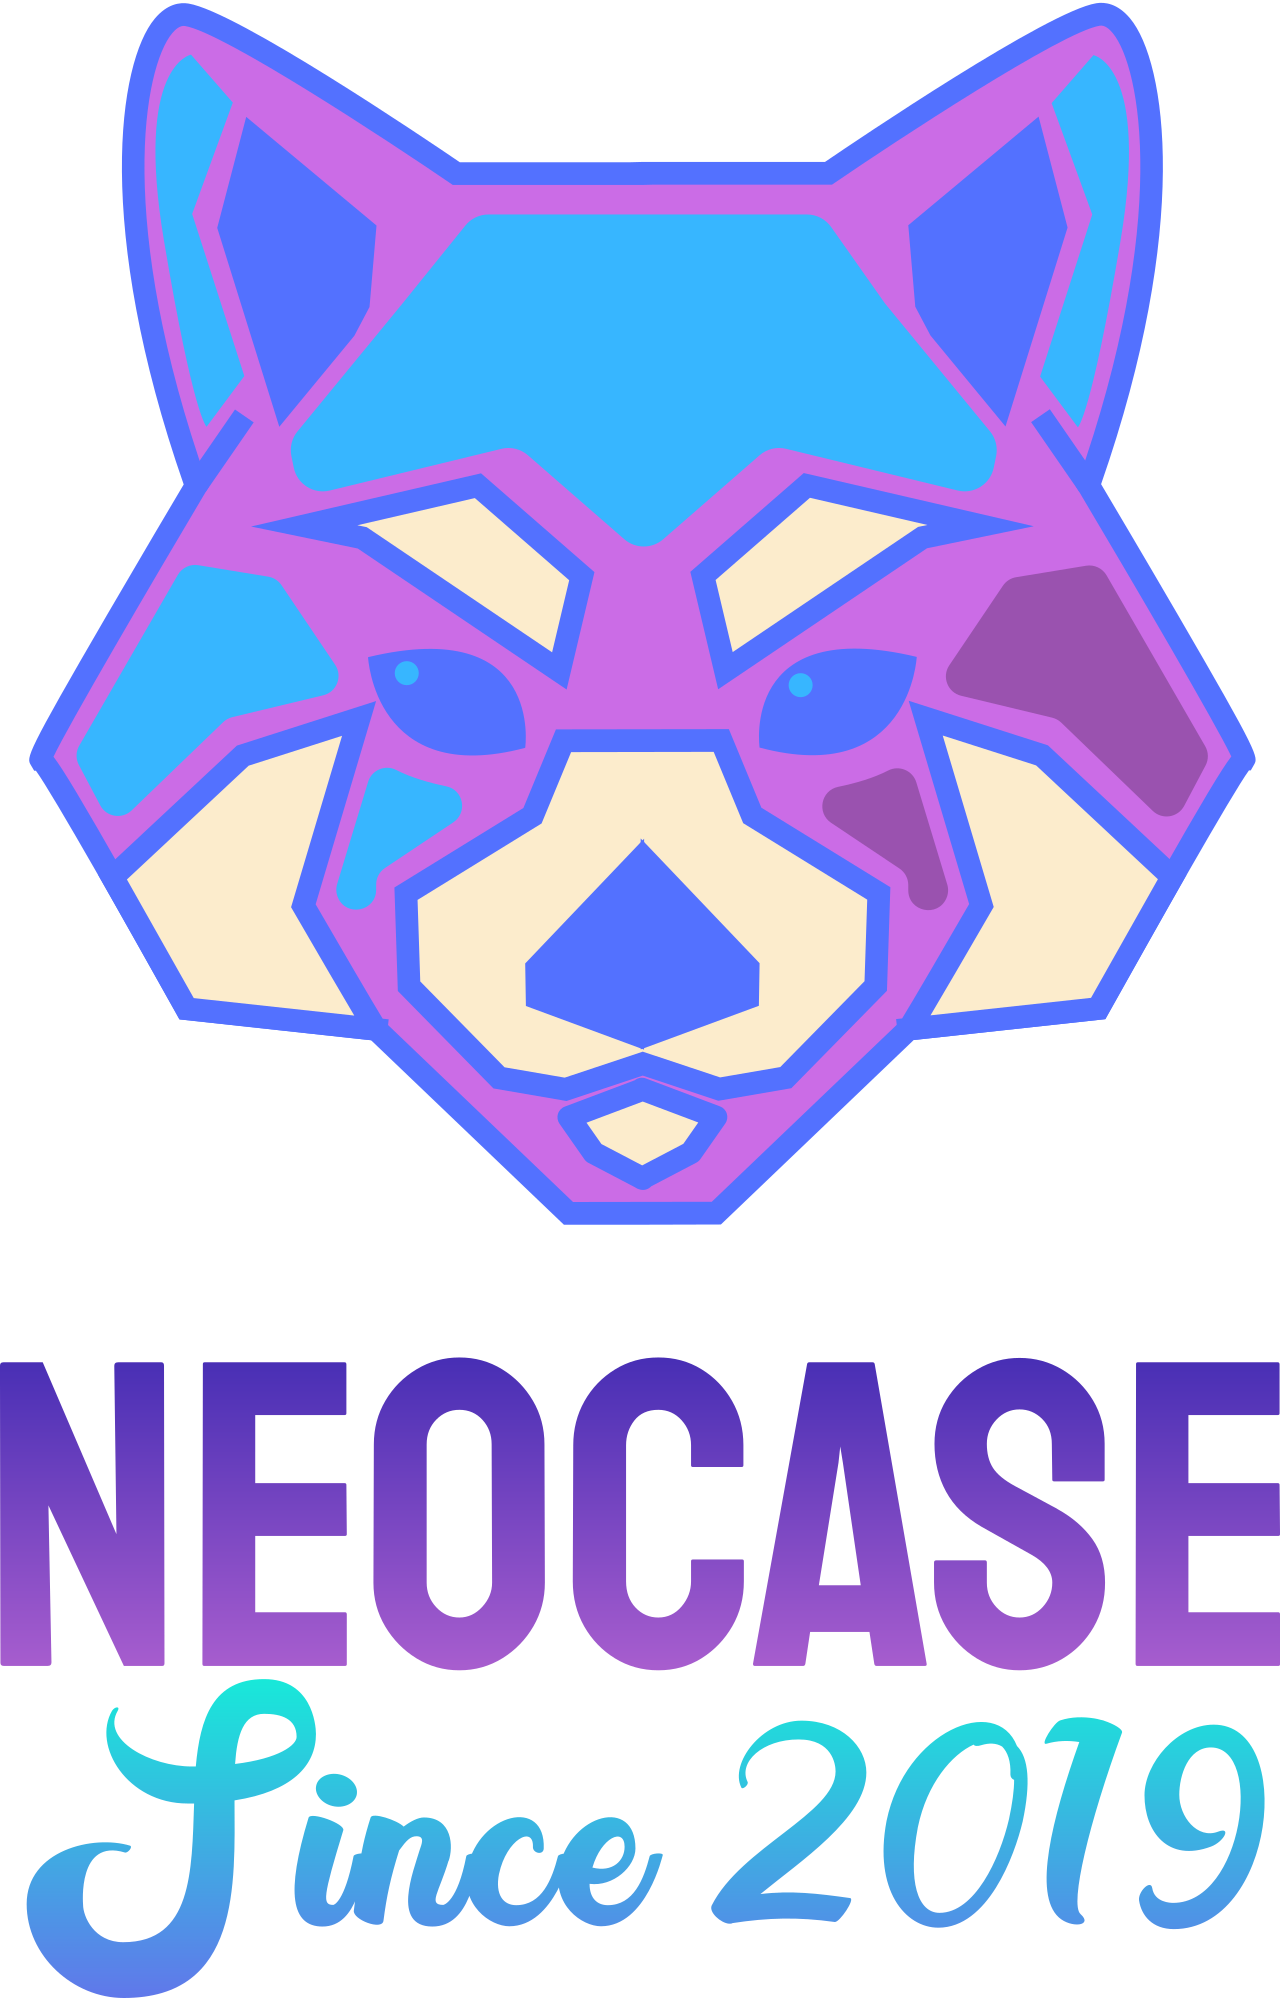 NeoCase's logo